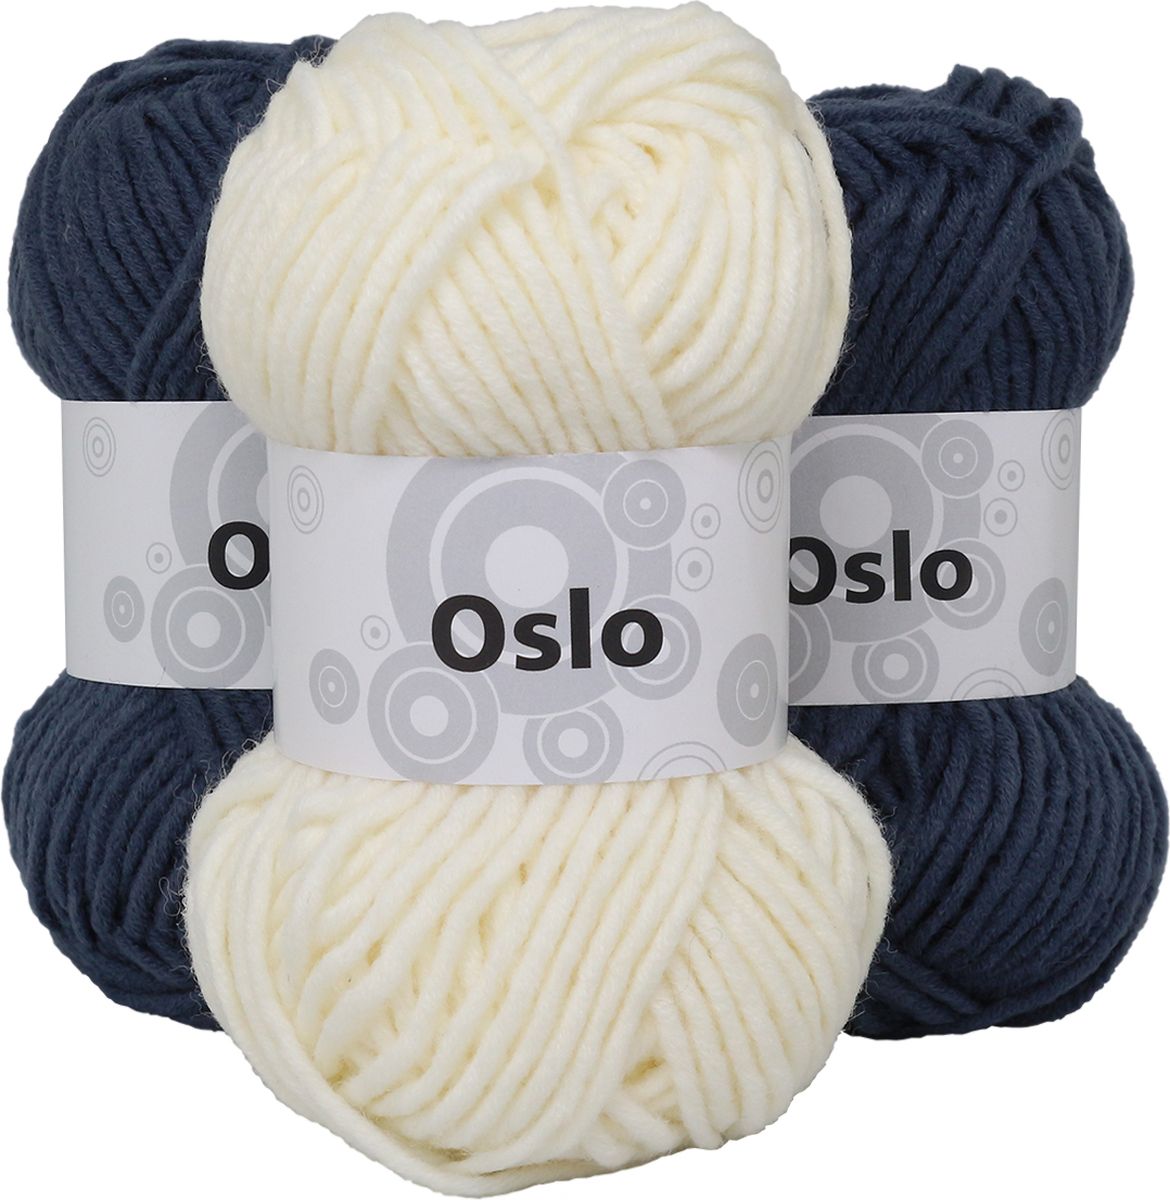 фото Набор для вязания шапки Vendita "Oslo", цвет: синий, белый, 50 м, 50 г, 3 шт